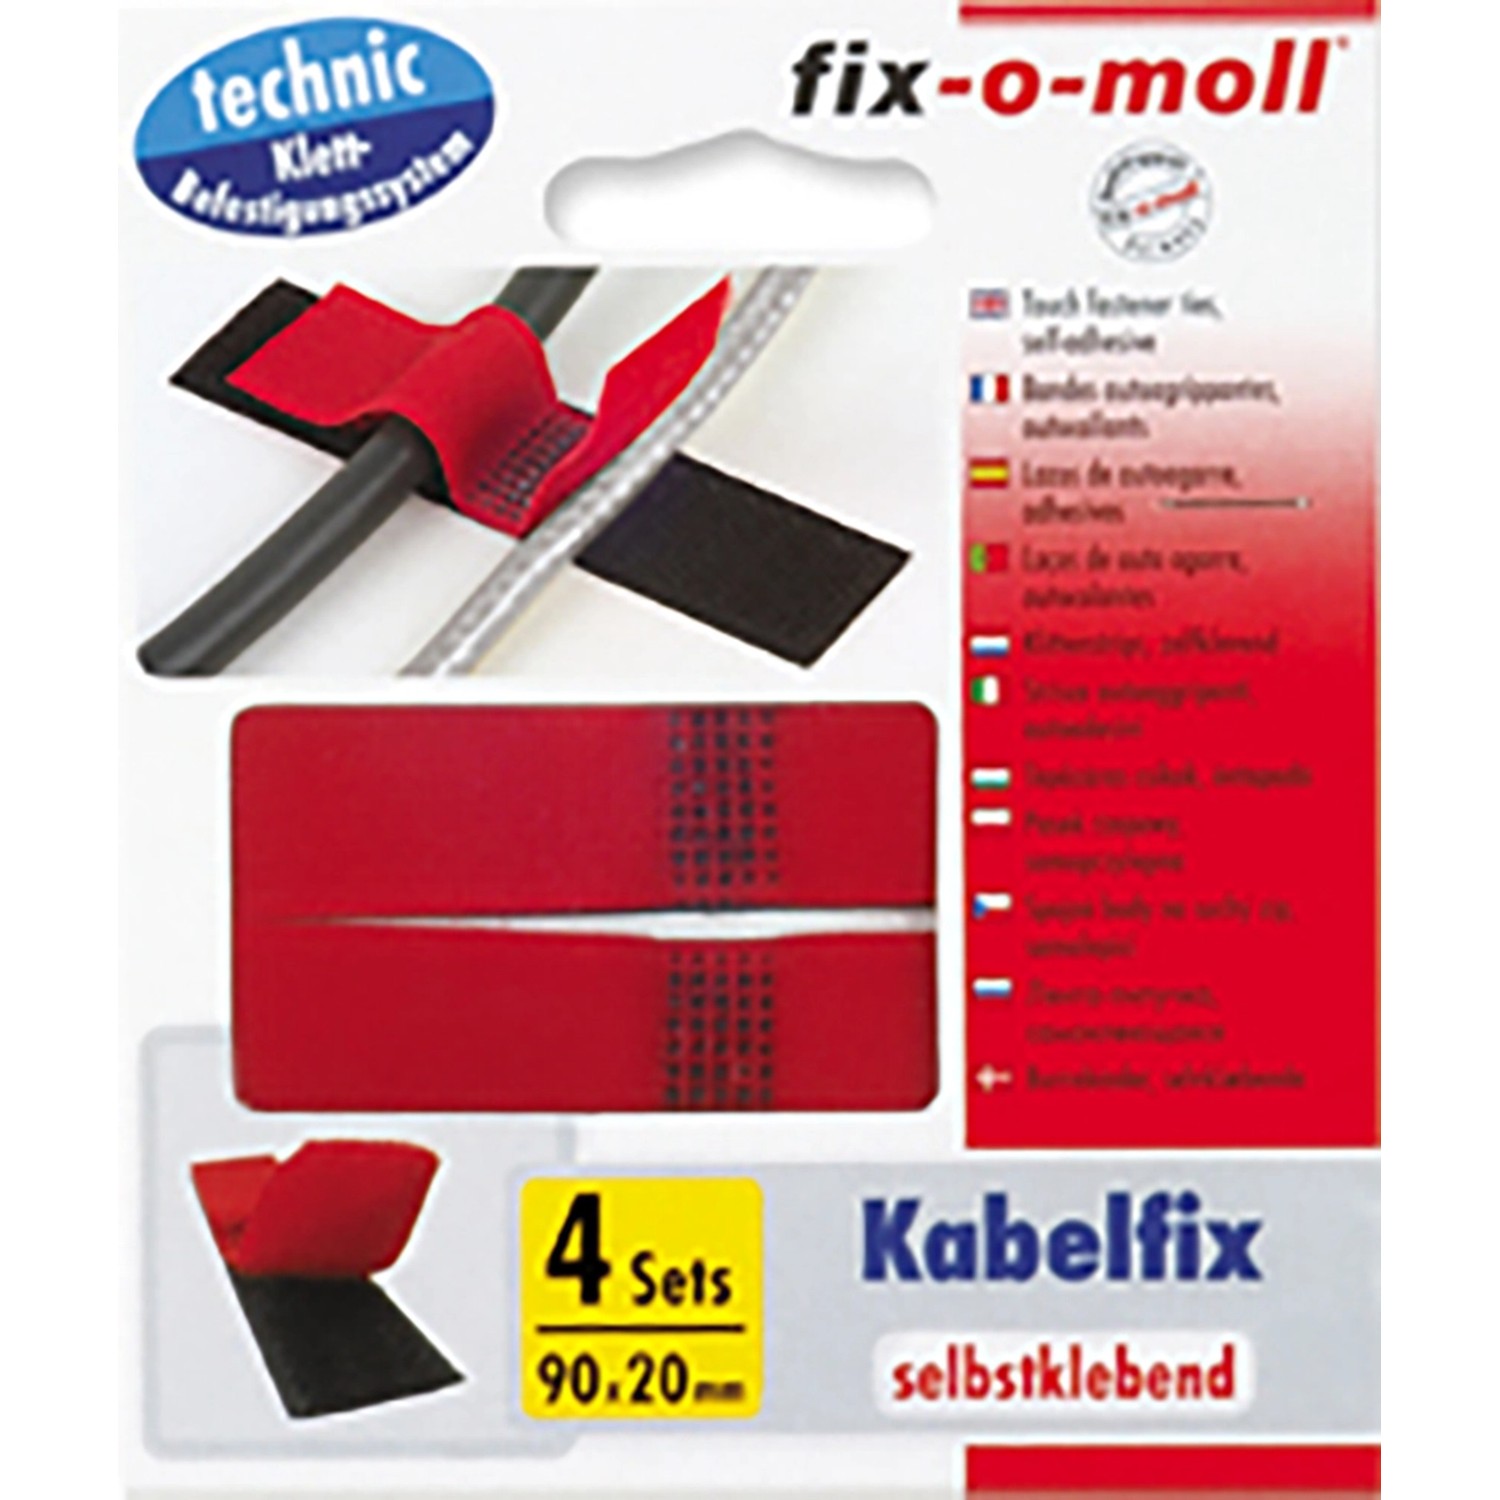 Fix-o-moll Klett-Binder Kabelfix selbstklebend Grau-Schwarz 100 mm x 20 mm 4 Stü